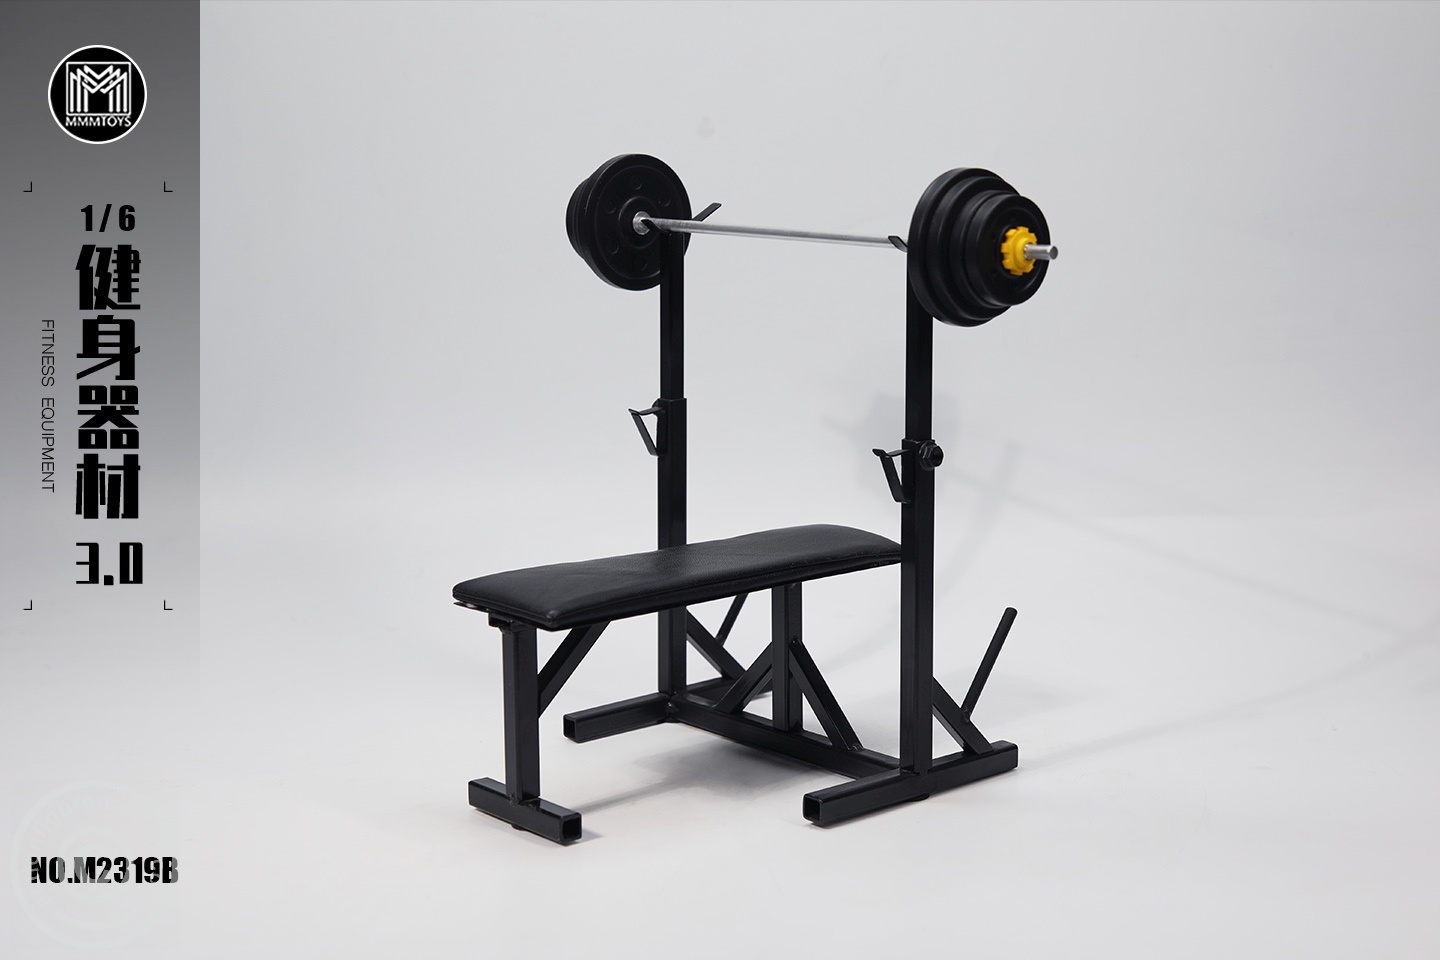 Fitness Equipment 3.0 - Set B